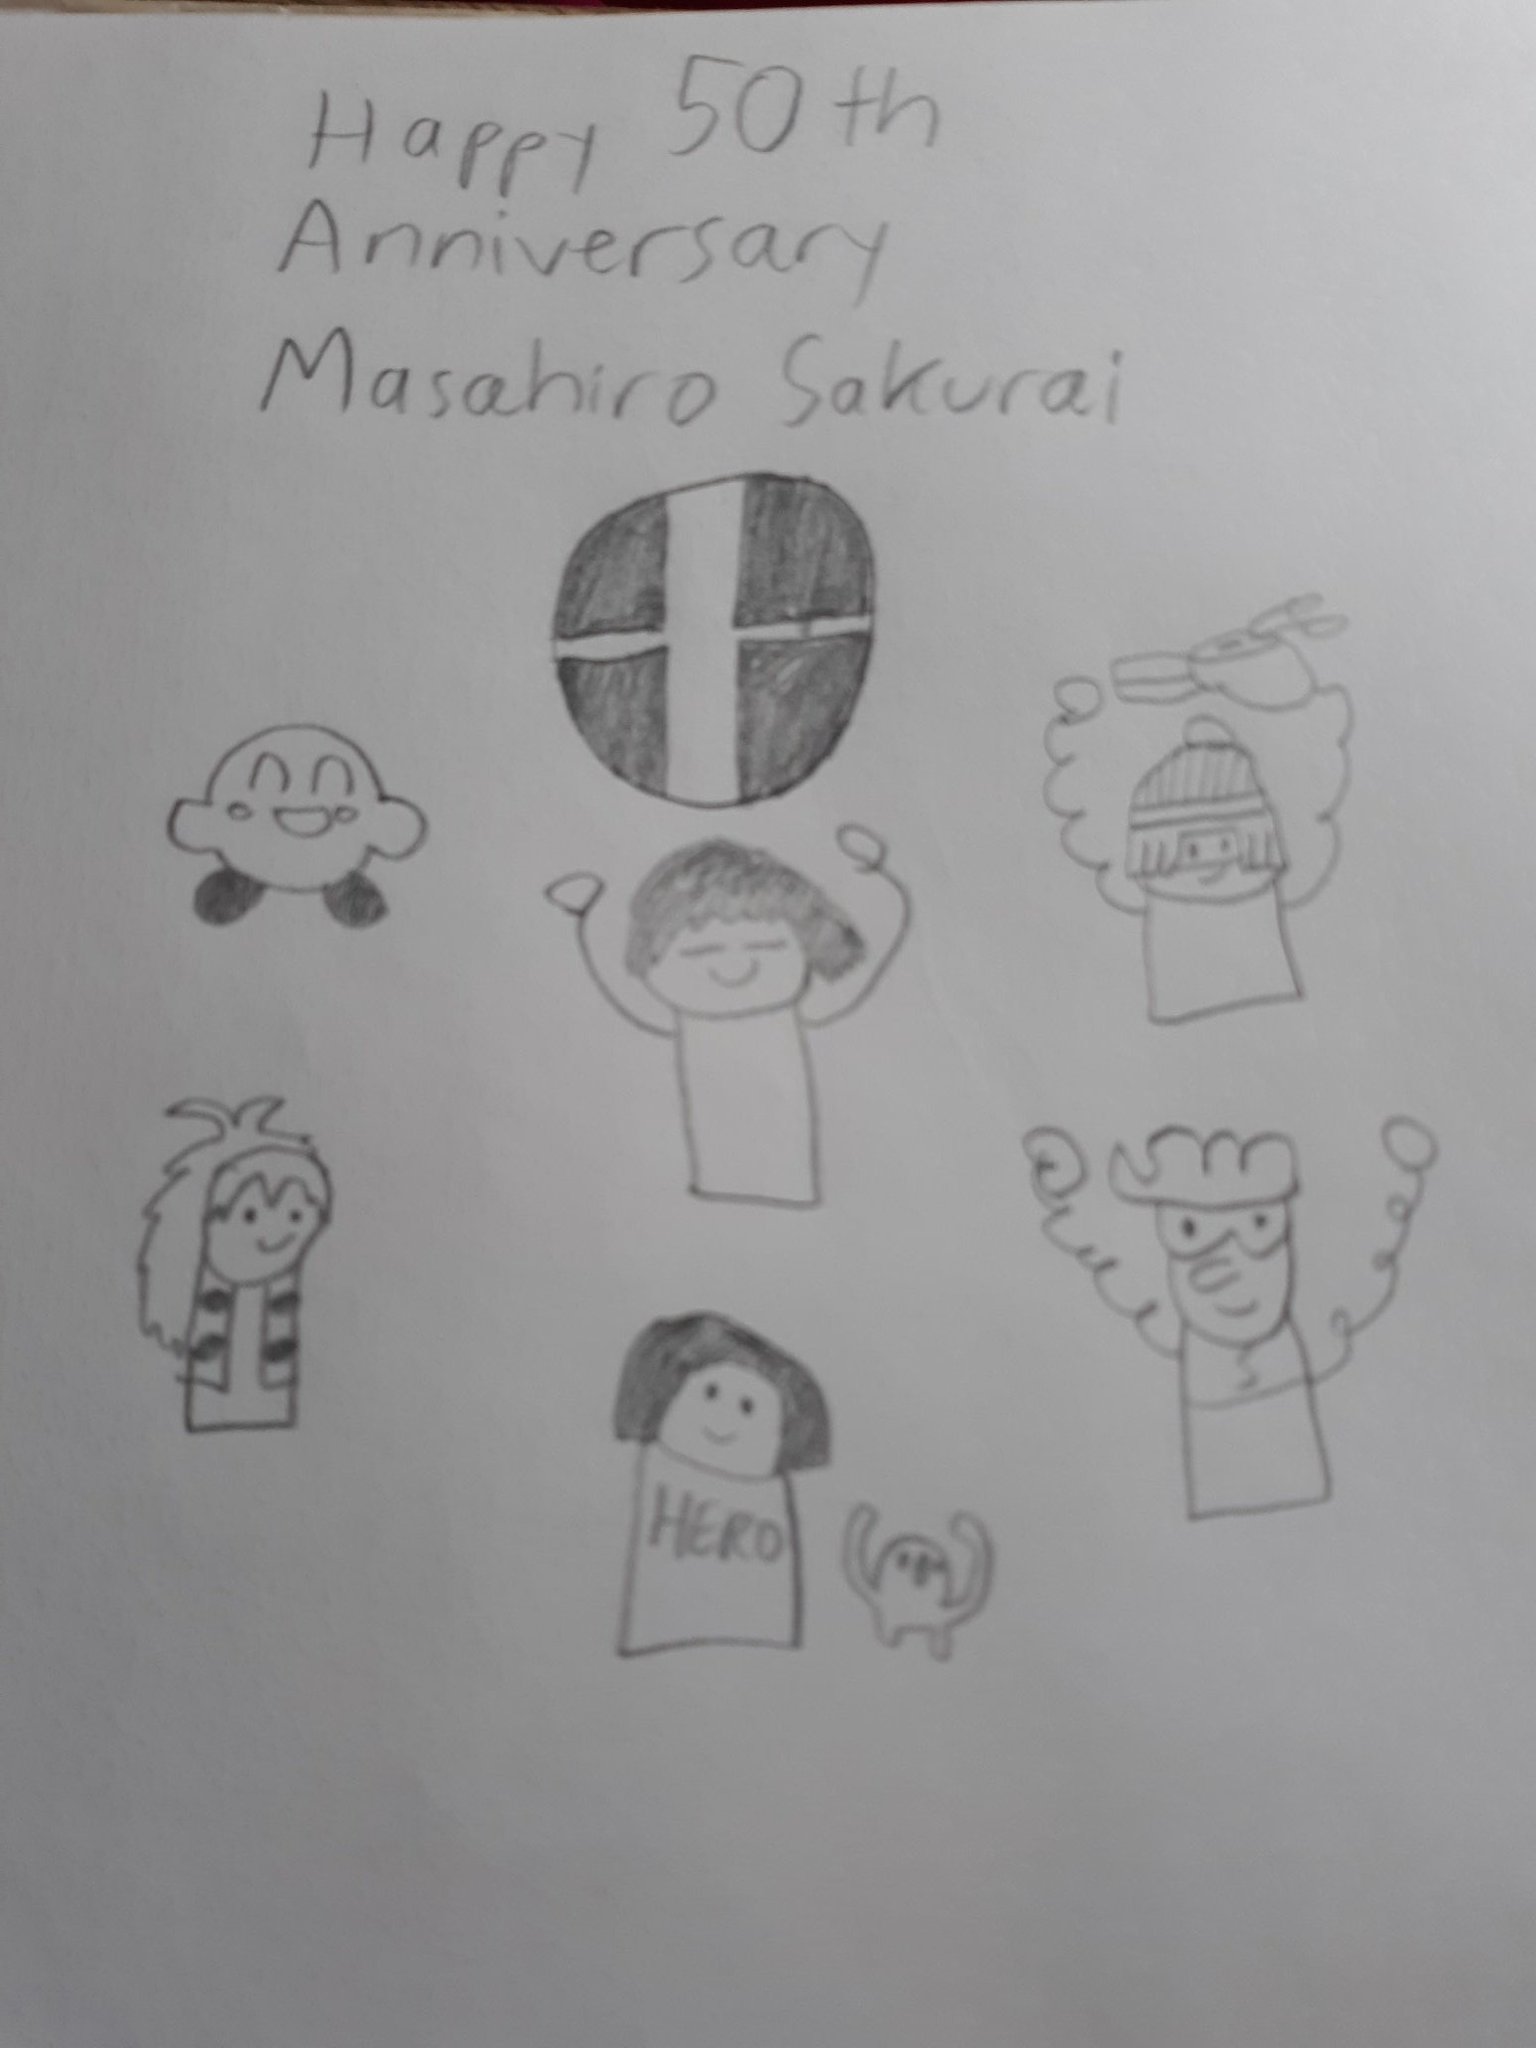 Happy Birthday, Masahiro Sakurai!  The Man behind Kirby and Samsh Bros. 